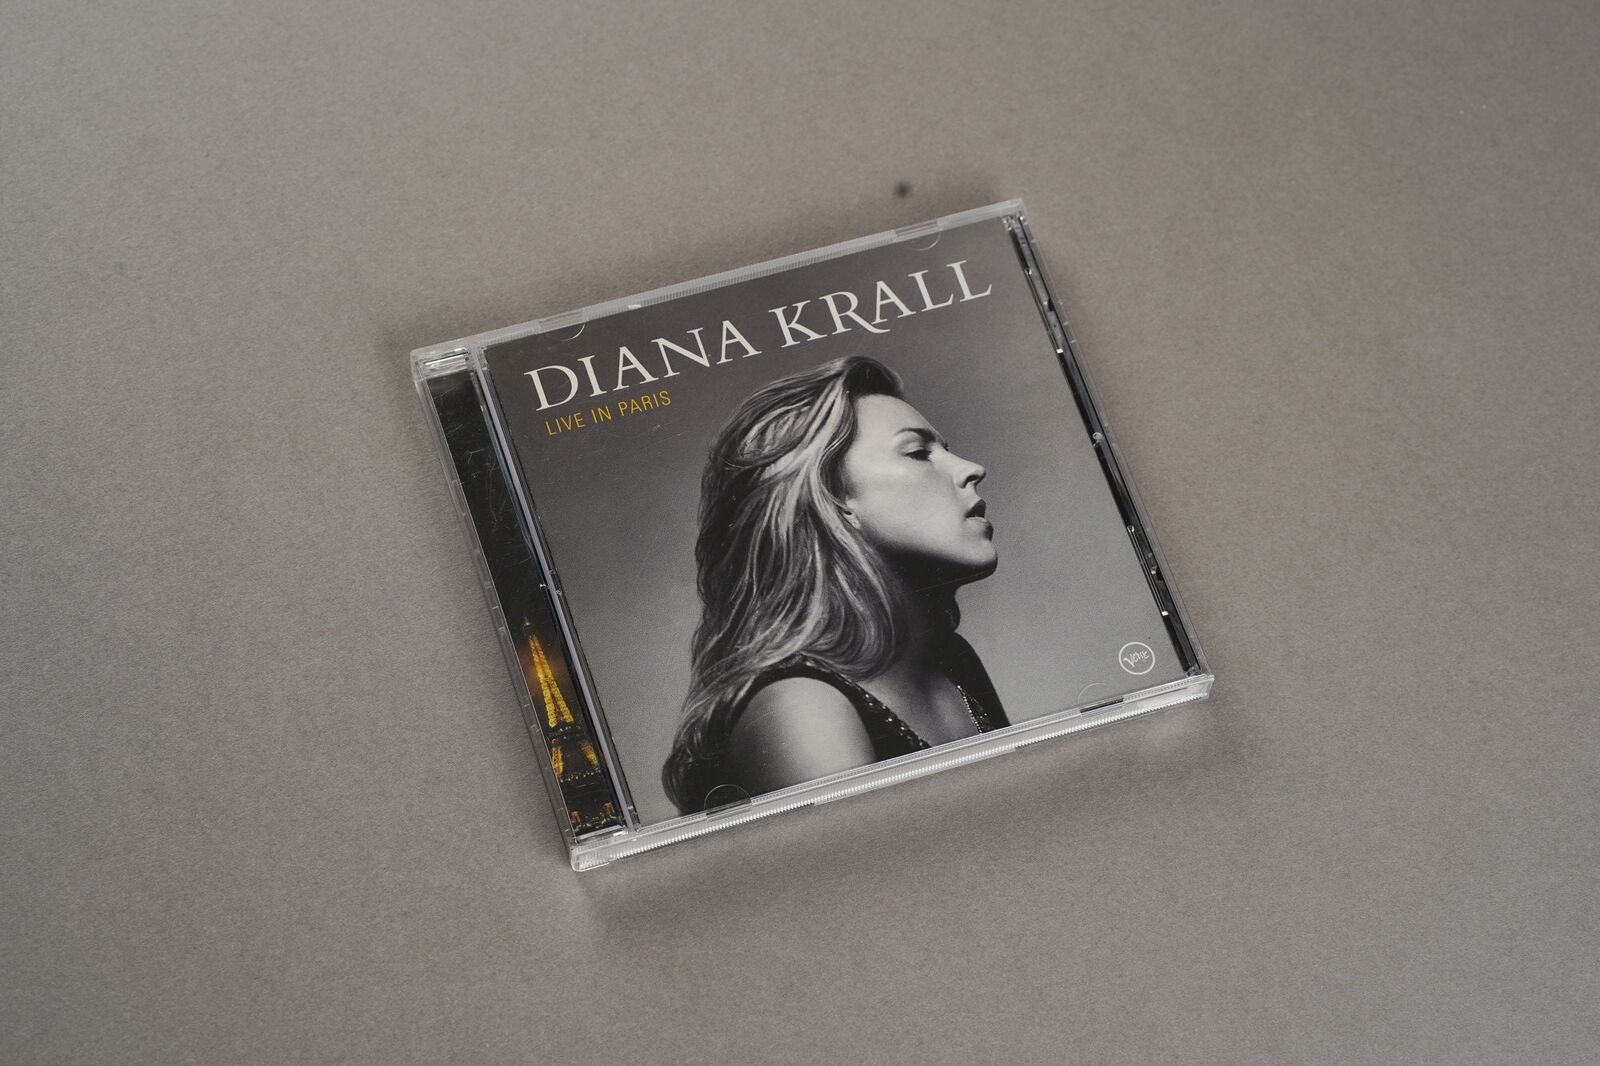 Diana Krall - Live in Paris - 2001 Original CD Compact Disc Album